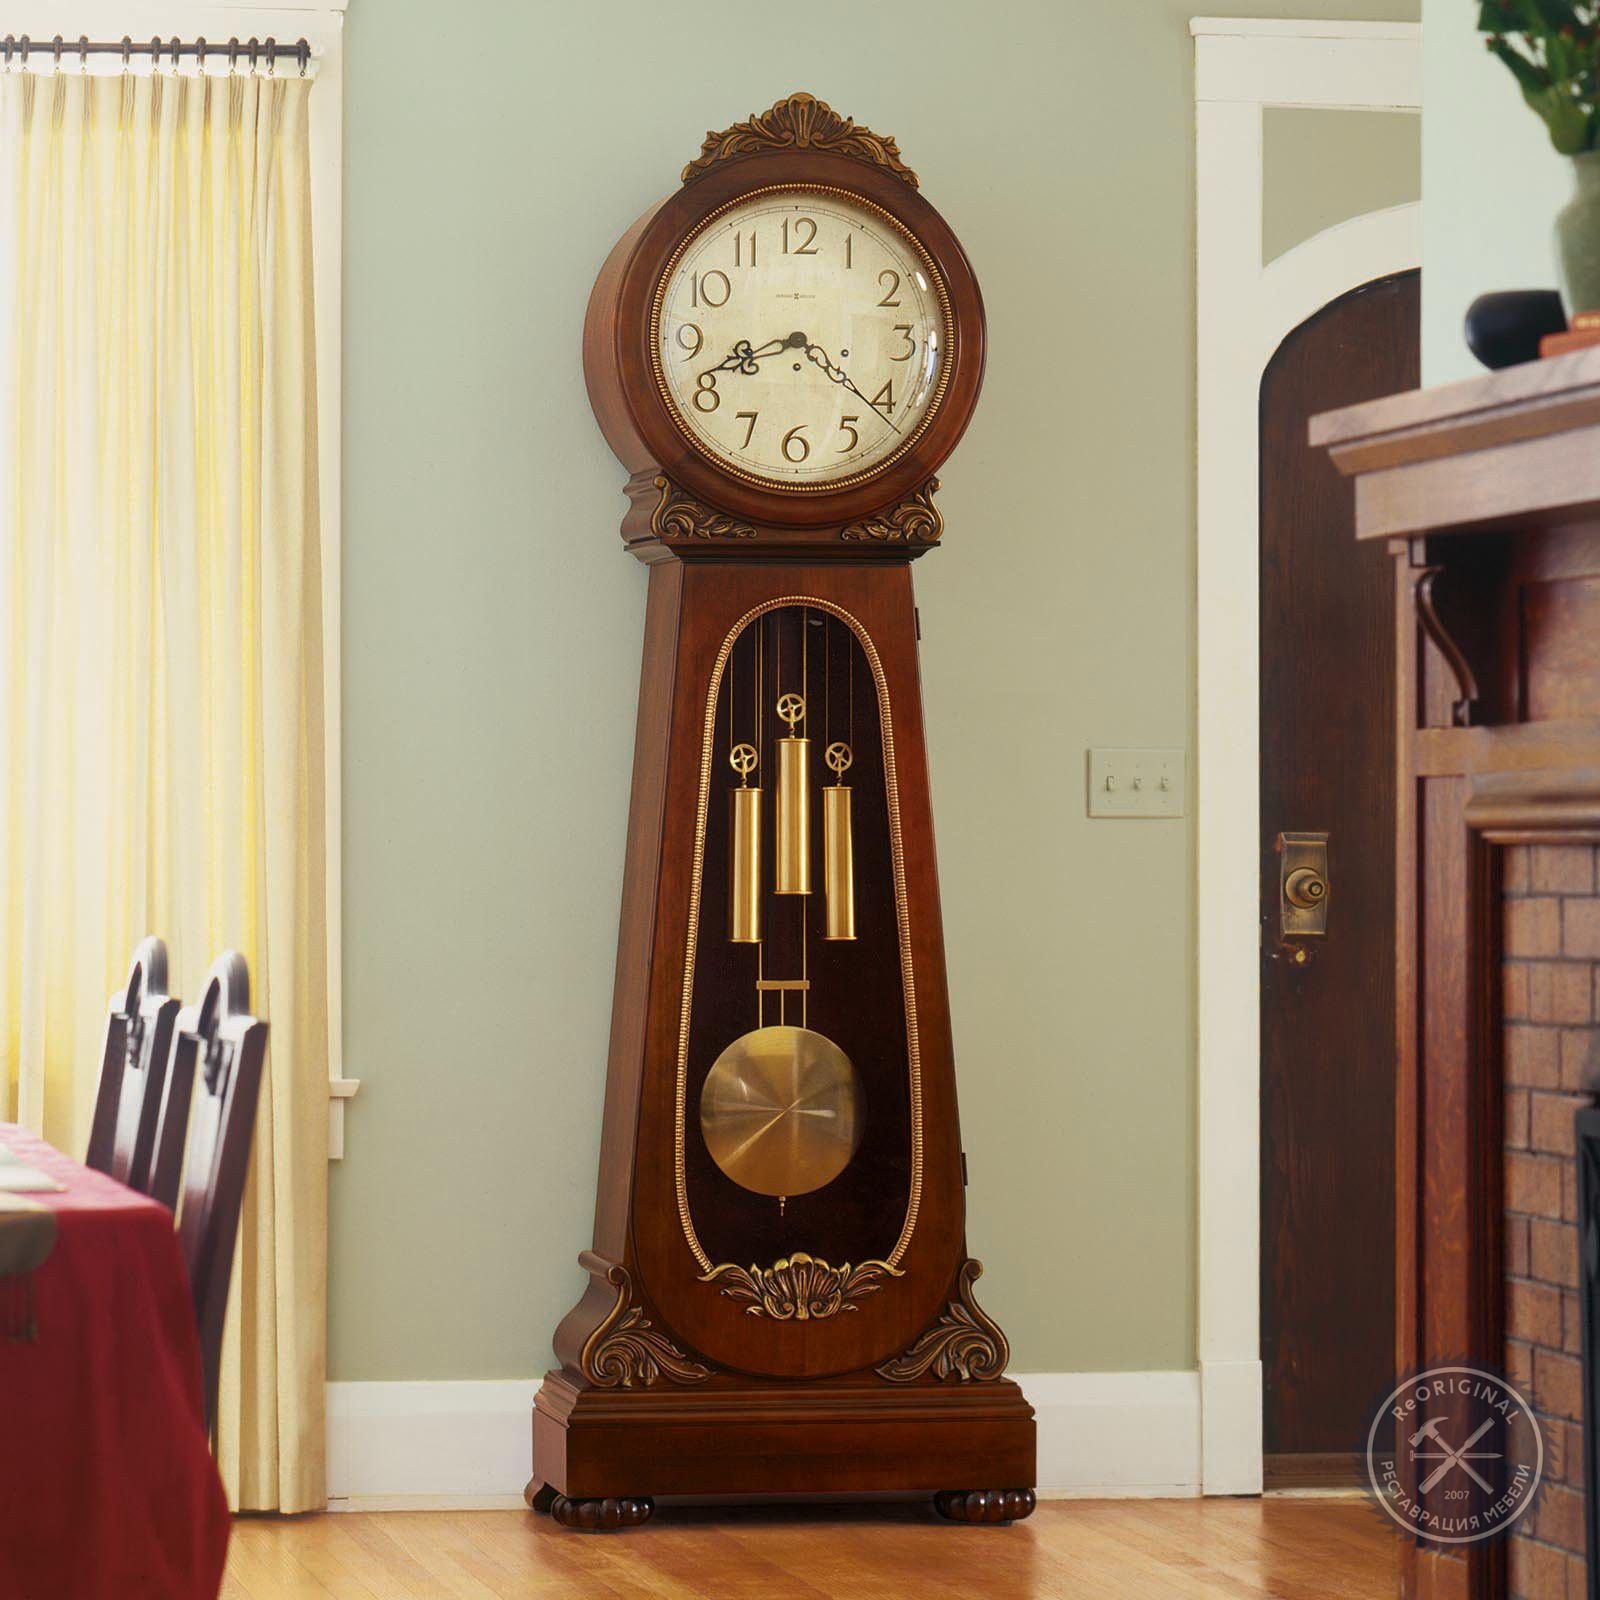 Напольные часы 5. Grandfather Clock часы. Напольные часы в интерьере. Старинные напольные часы.